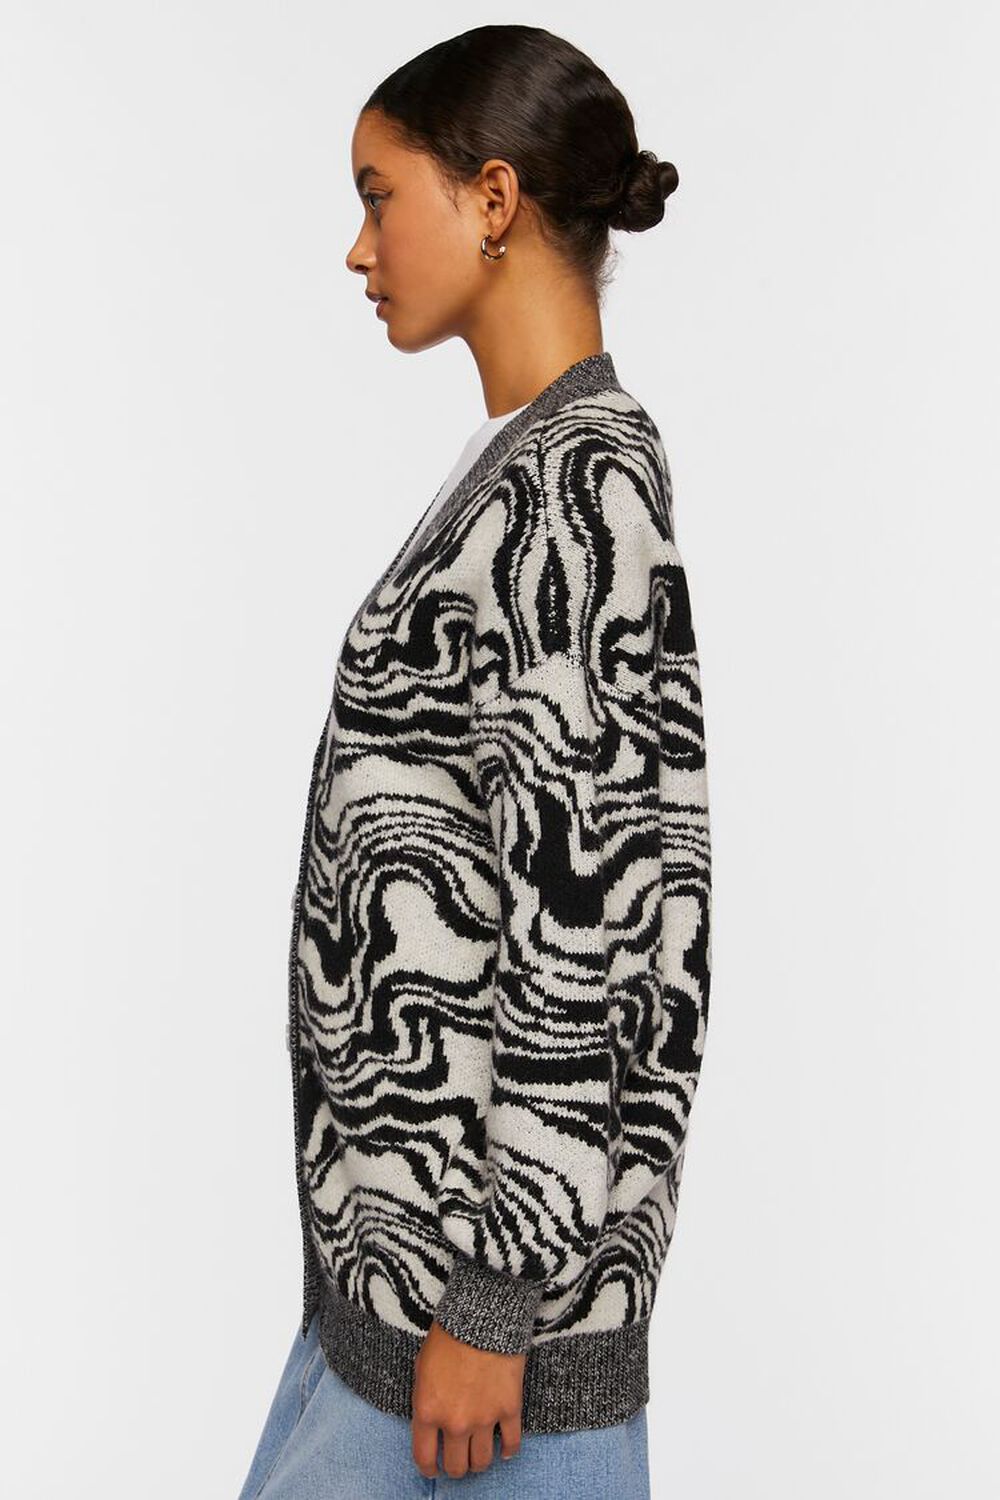 BLACK/CREAM Oversized Abstract Cardigan Sweater, image 2